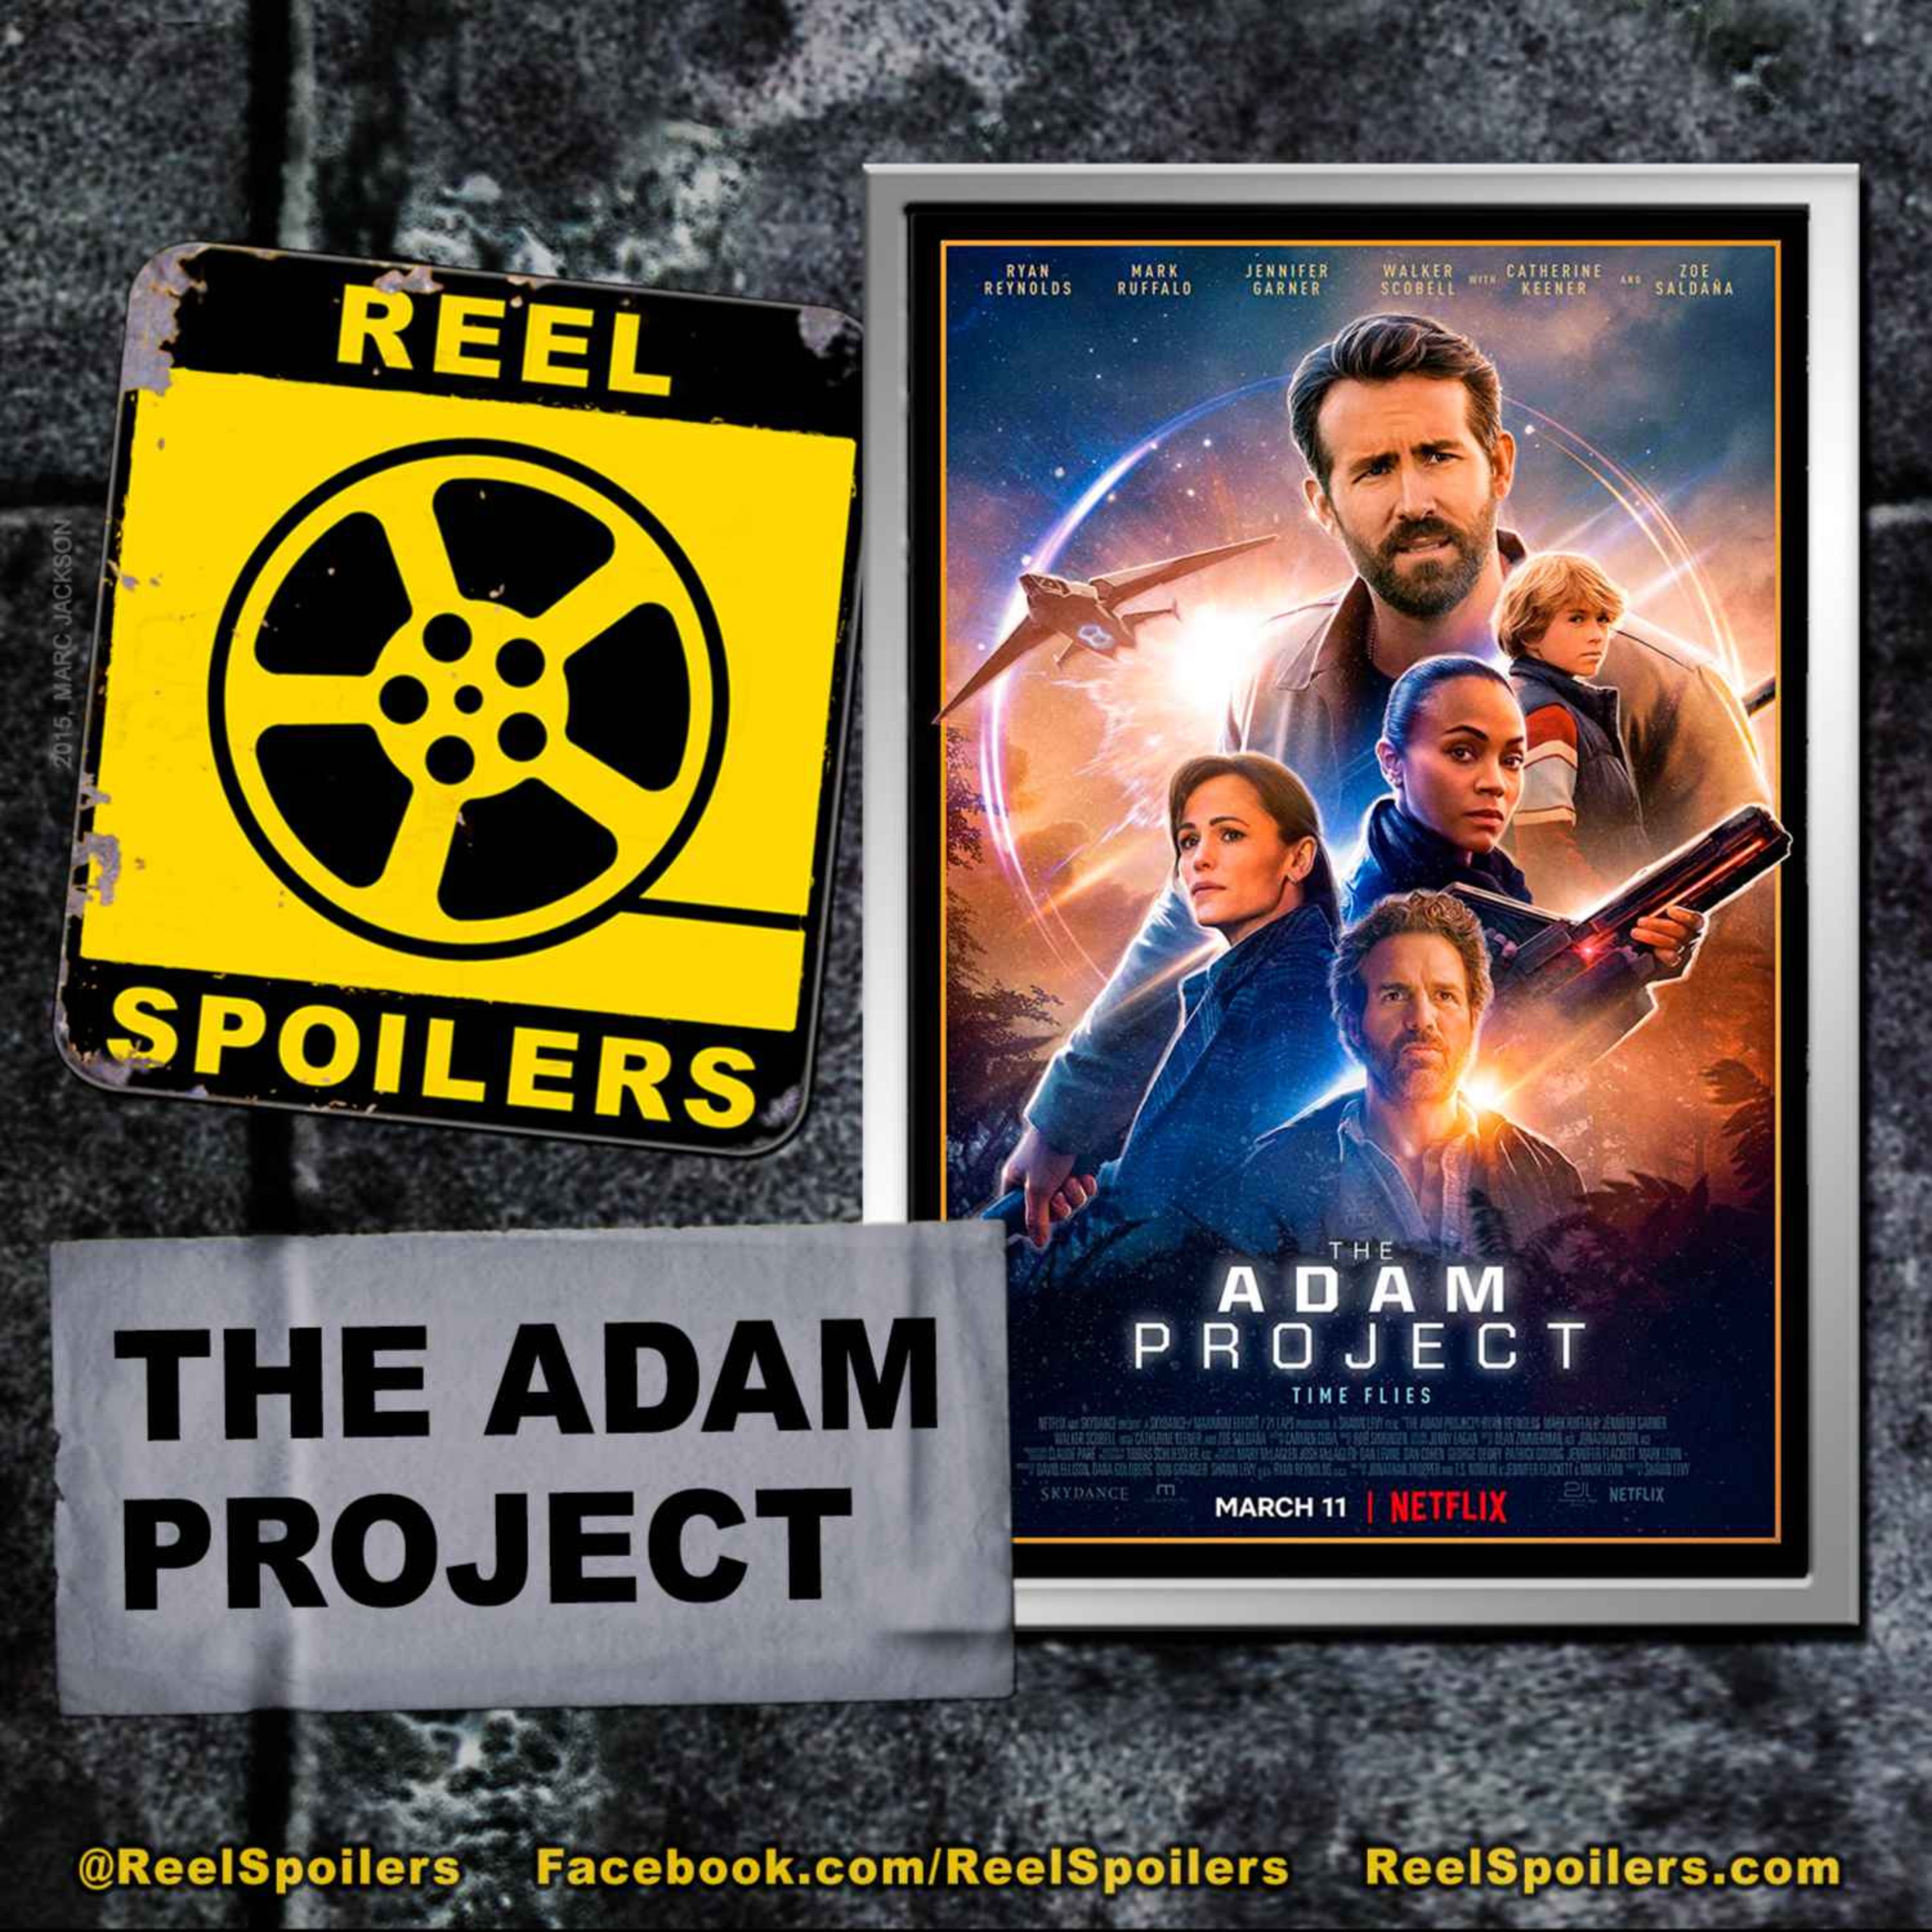 THE ADAM PROJECT Starring Ryan Reynolds, Walker Scobell, Mark Ruffalo Image